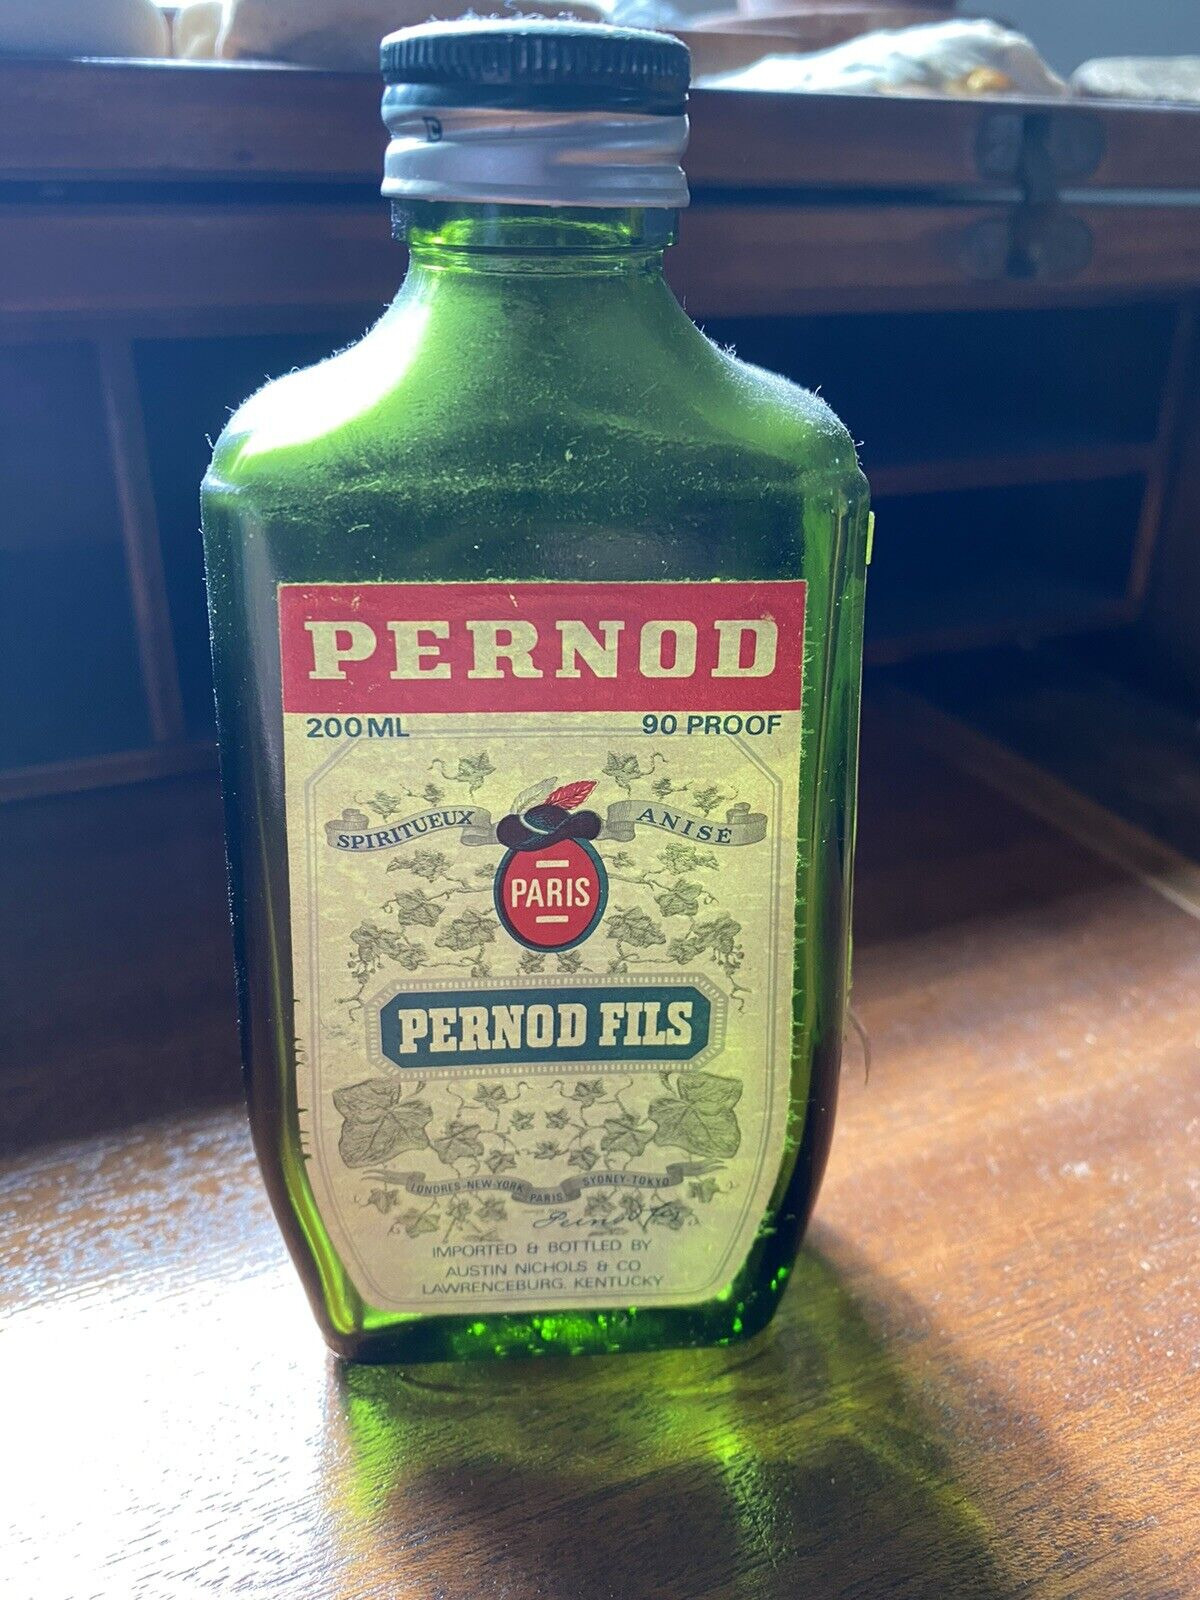 Pernod Fils Paris (empty) green bottle 200 ml 90 proof anise vintage graphics